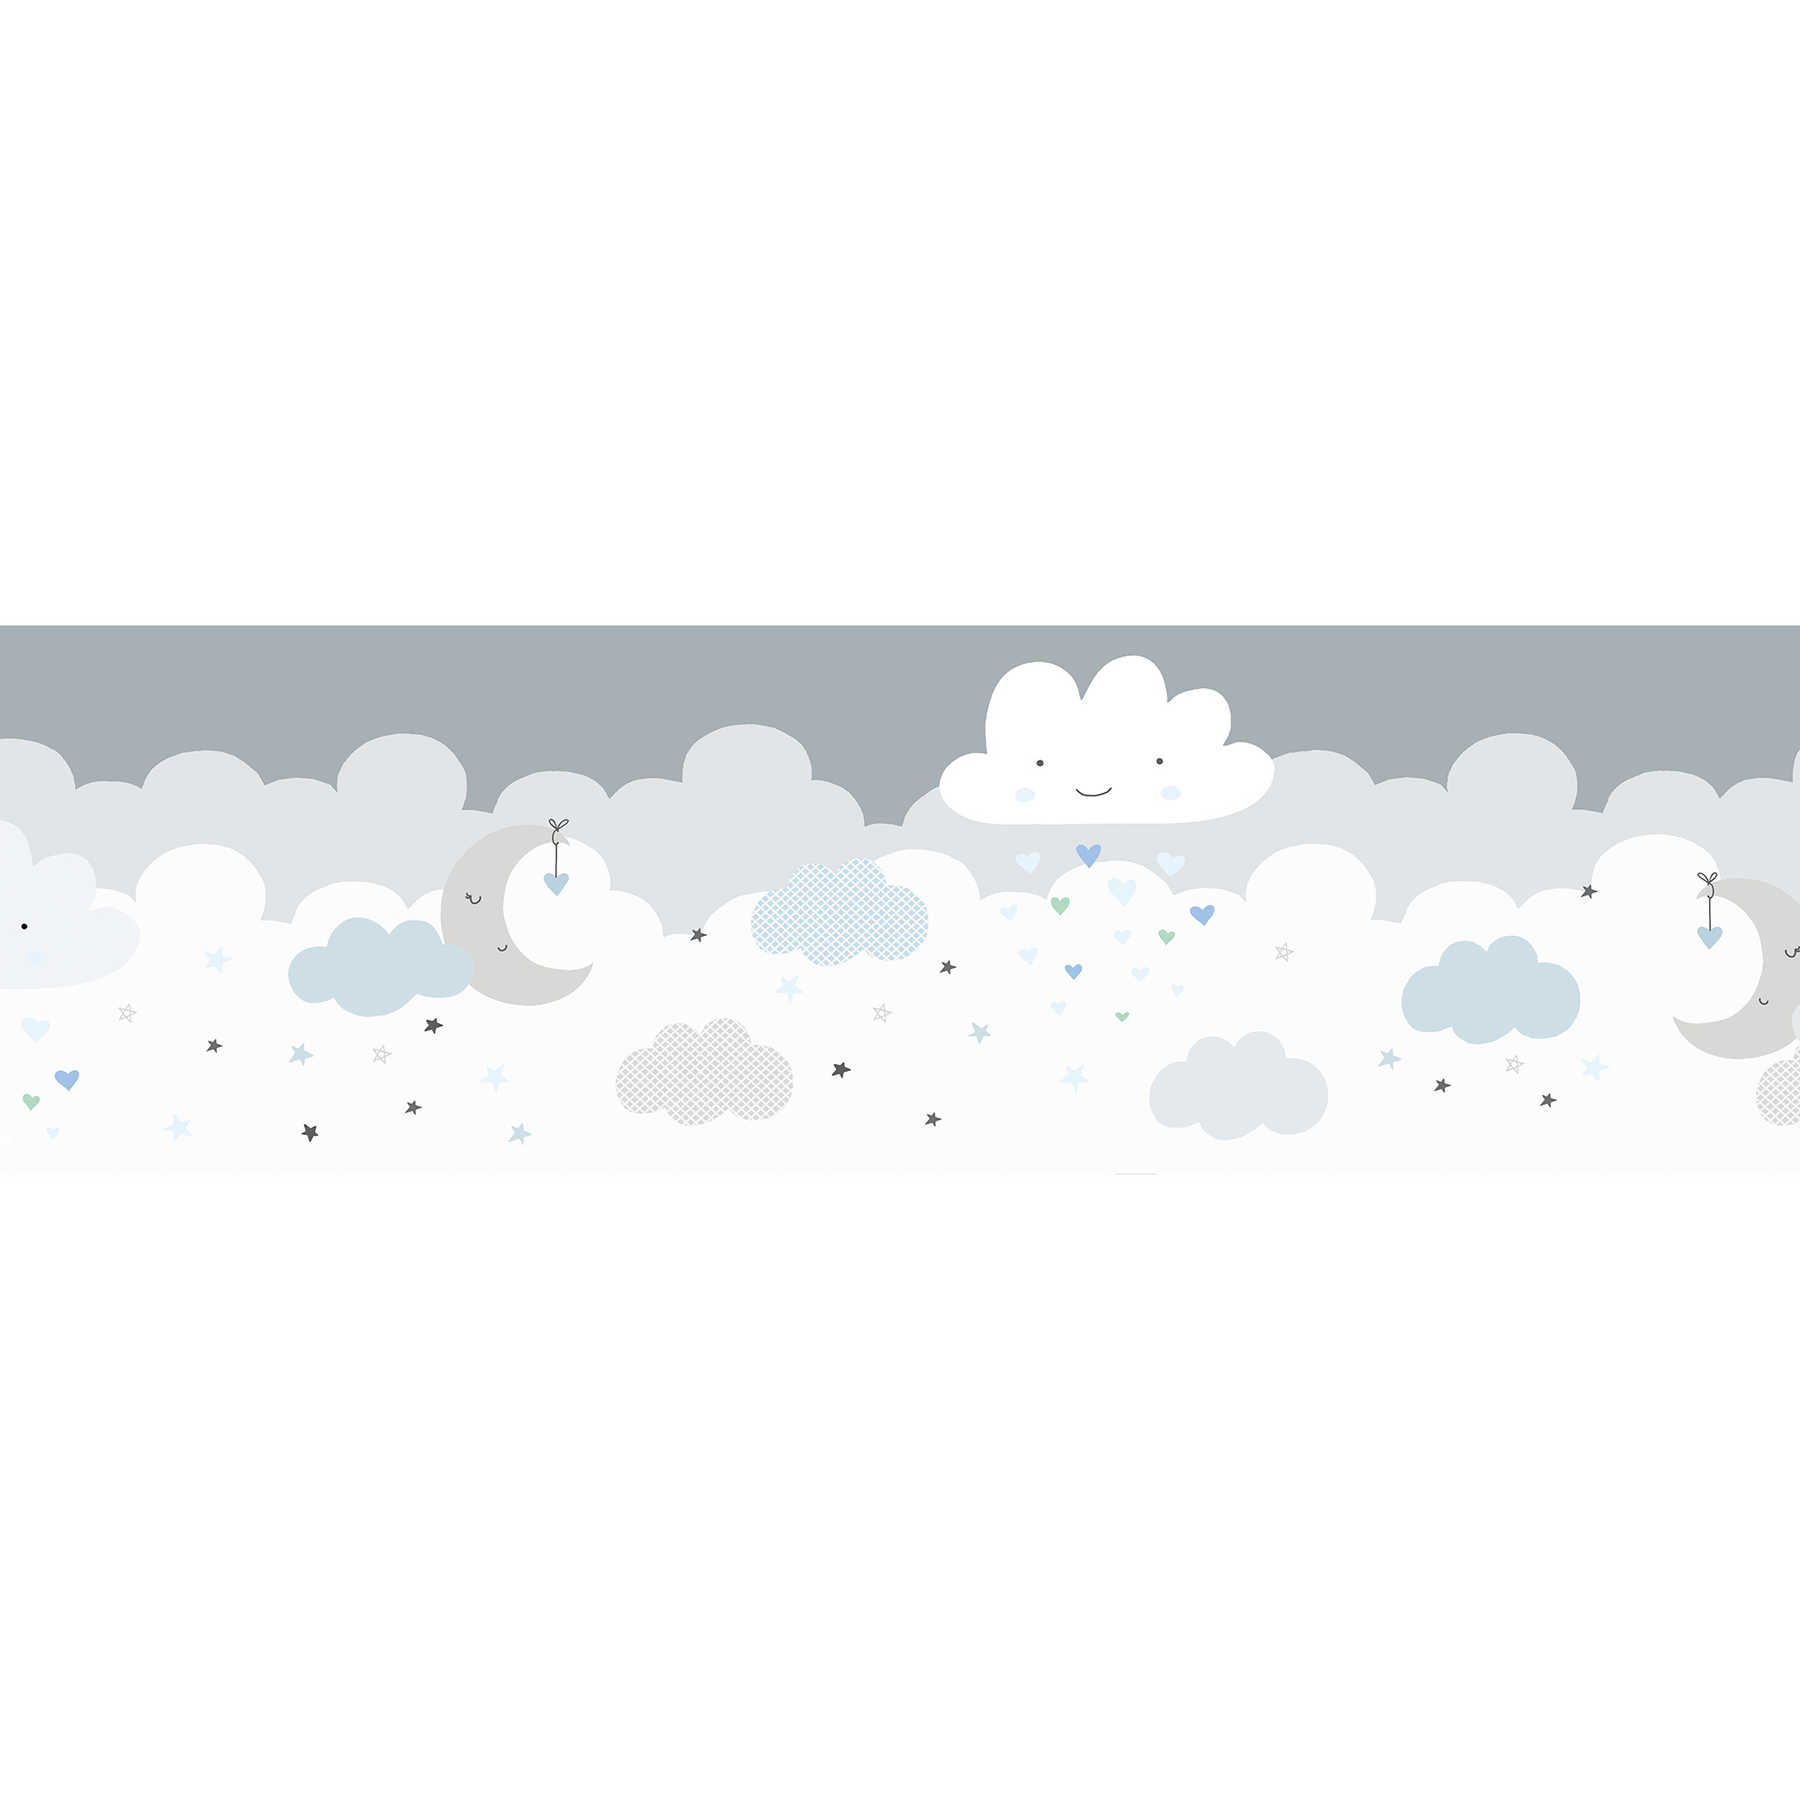         Self-adhesive baby room border "Blue sugar clouds" - blue, grey, white
    